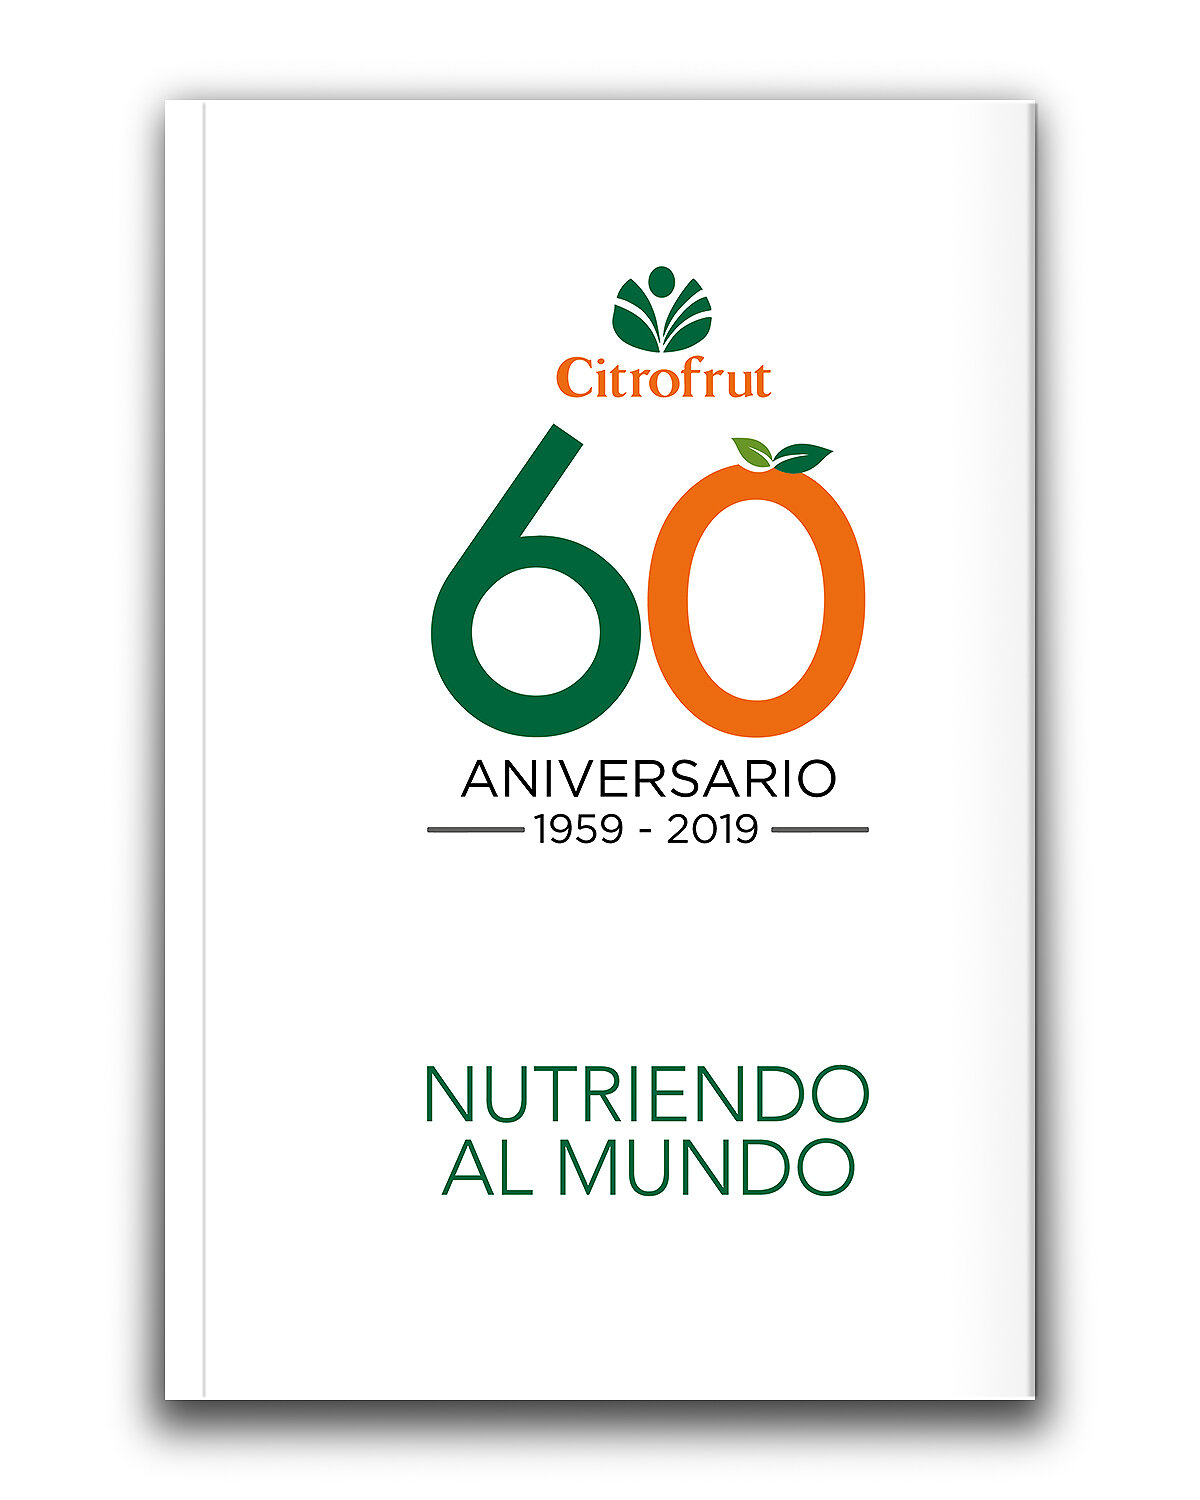 Citrofrut. 60 Aniversario 1959-2019. Nutriendo al mundo